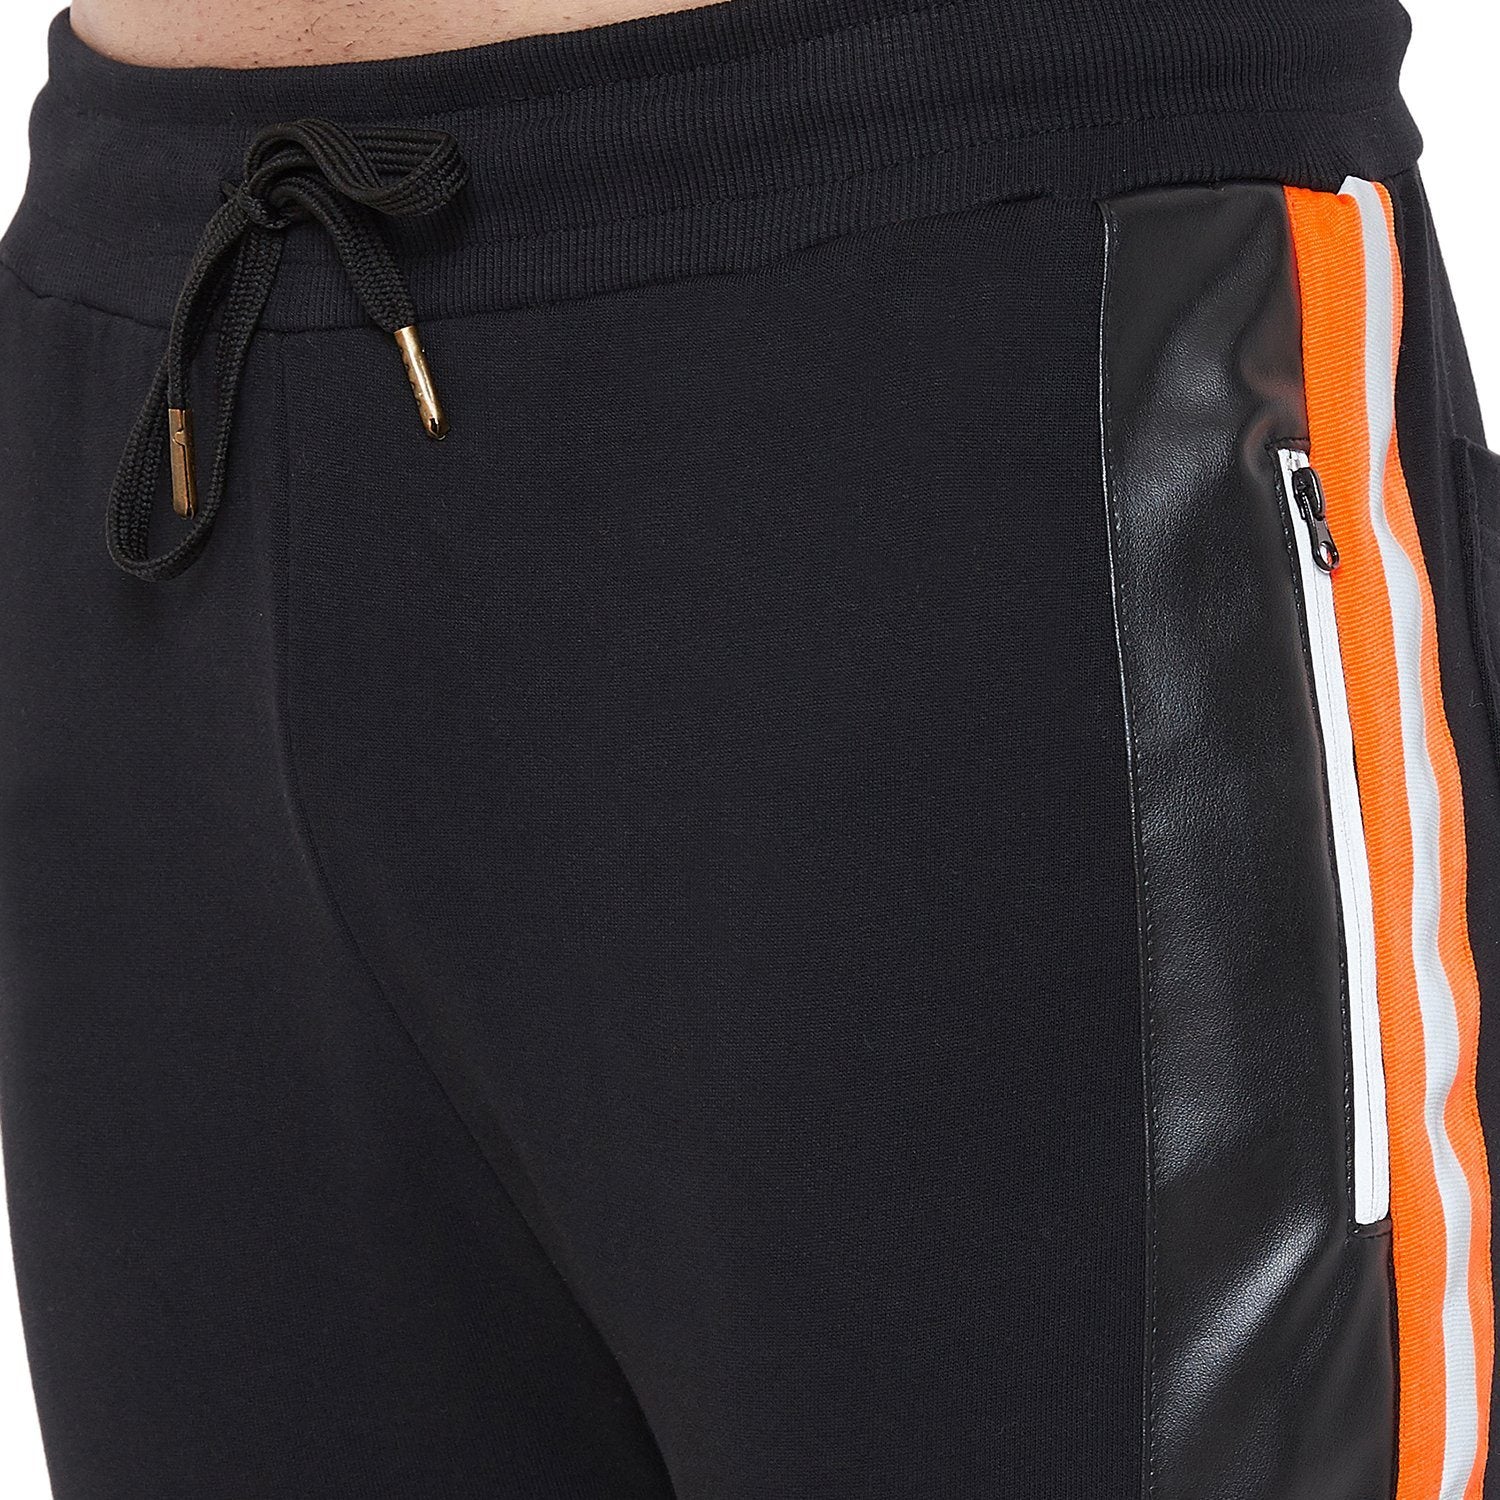 Buy Boys Navy Regular Fit Patterned Track Pants Online  791640  Allen  Solly